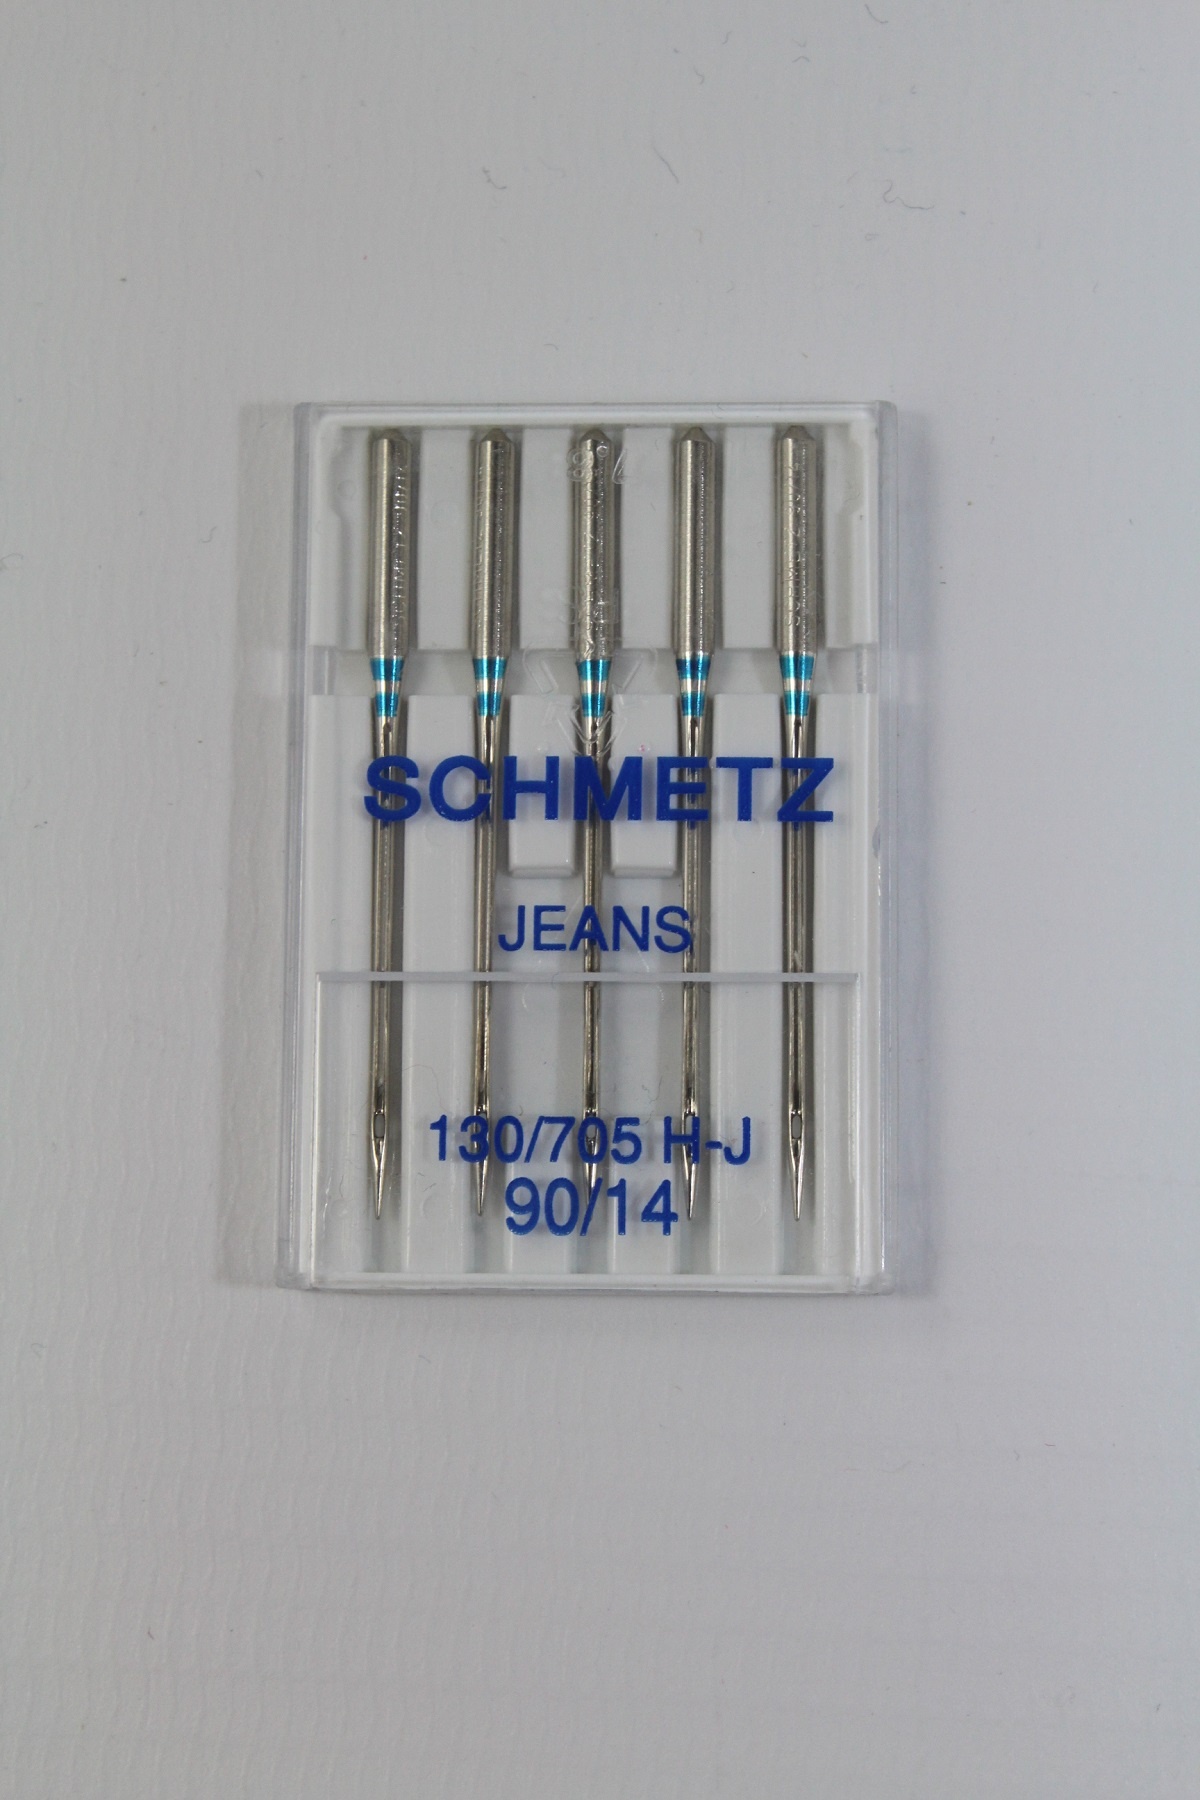 Schmetz Jeans 130/705 H-J 90/14